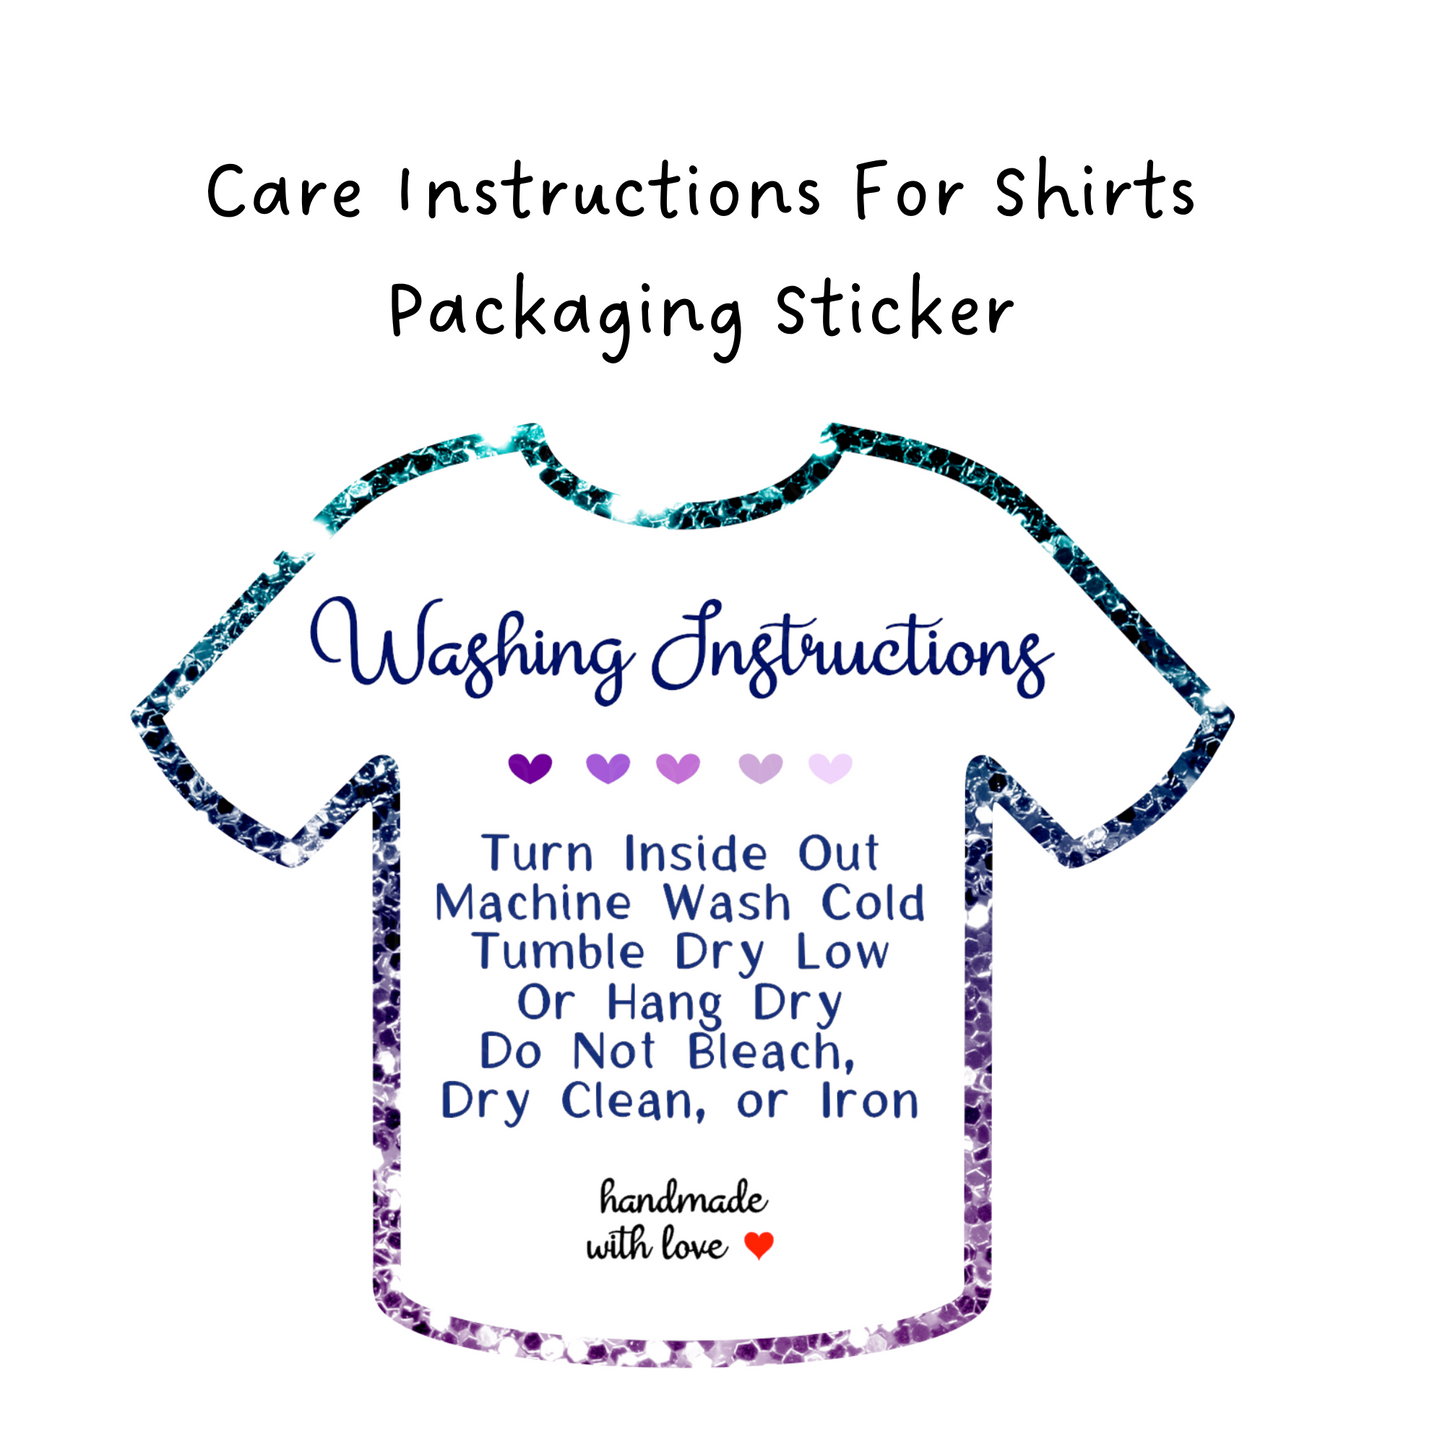 Galaxy Shirt Care Instructions Packaging Sticker